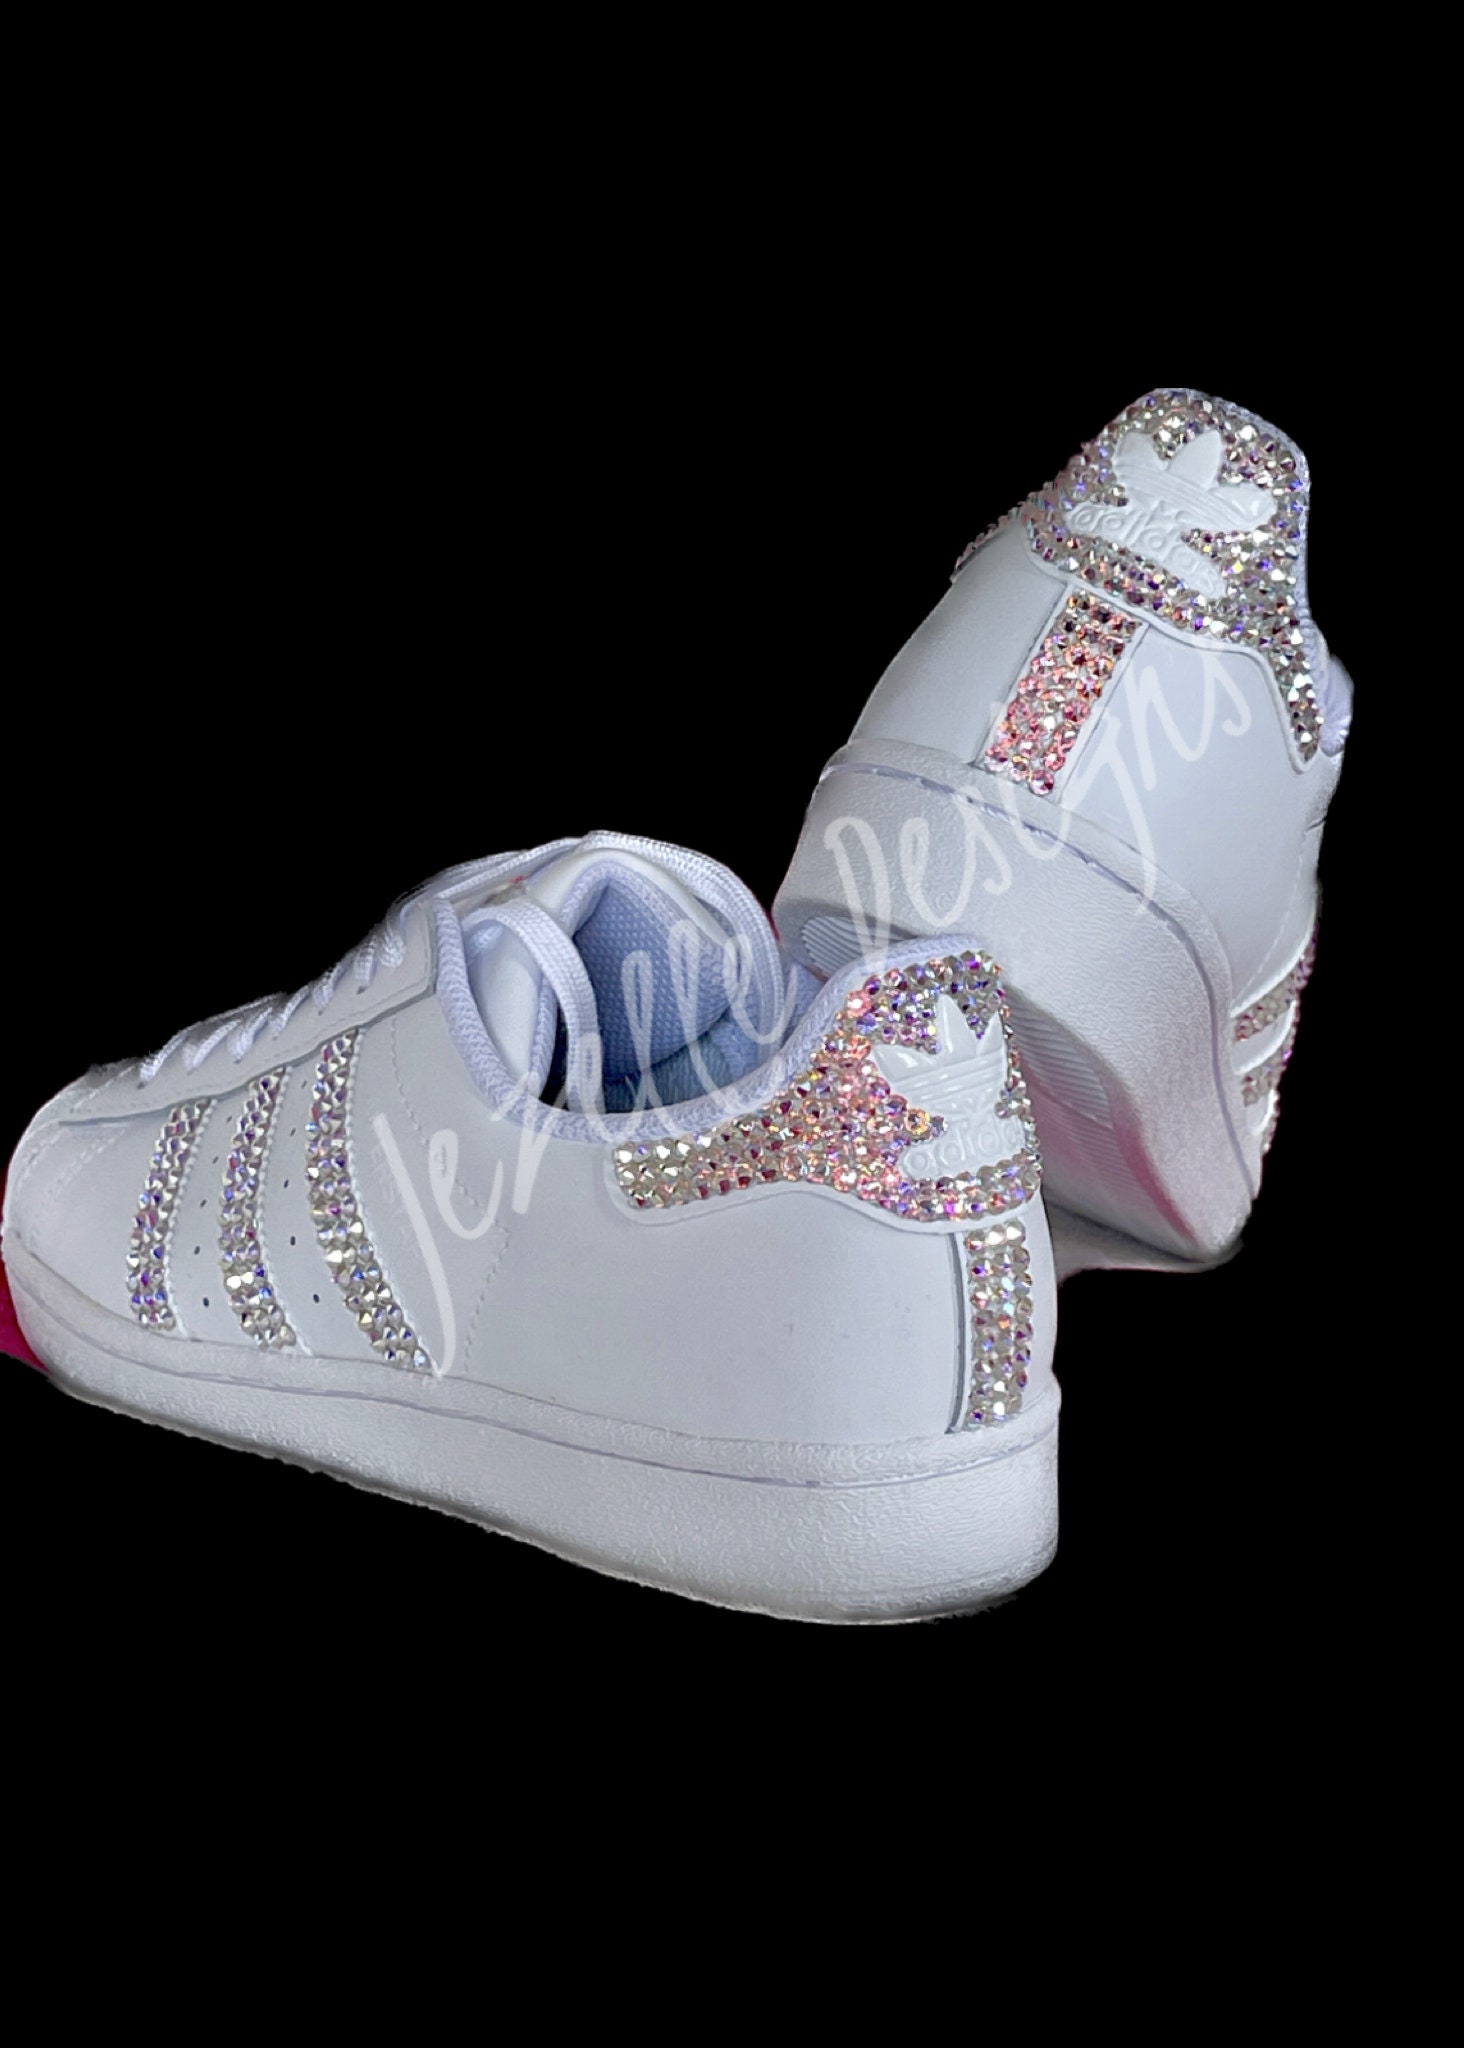 symaskine Brobrygge Marine Adi. Superstar Casual Shoes Adorned With Swarovski Crystals - Etsy